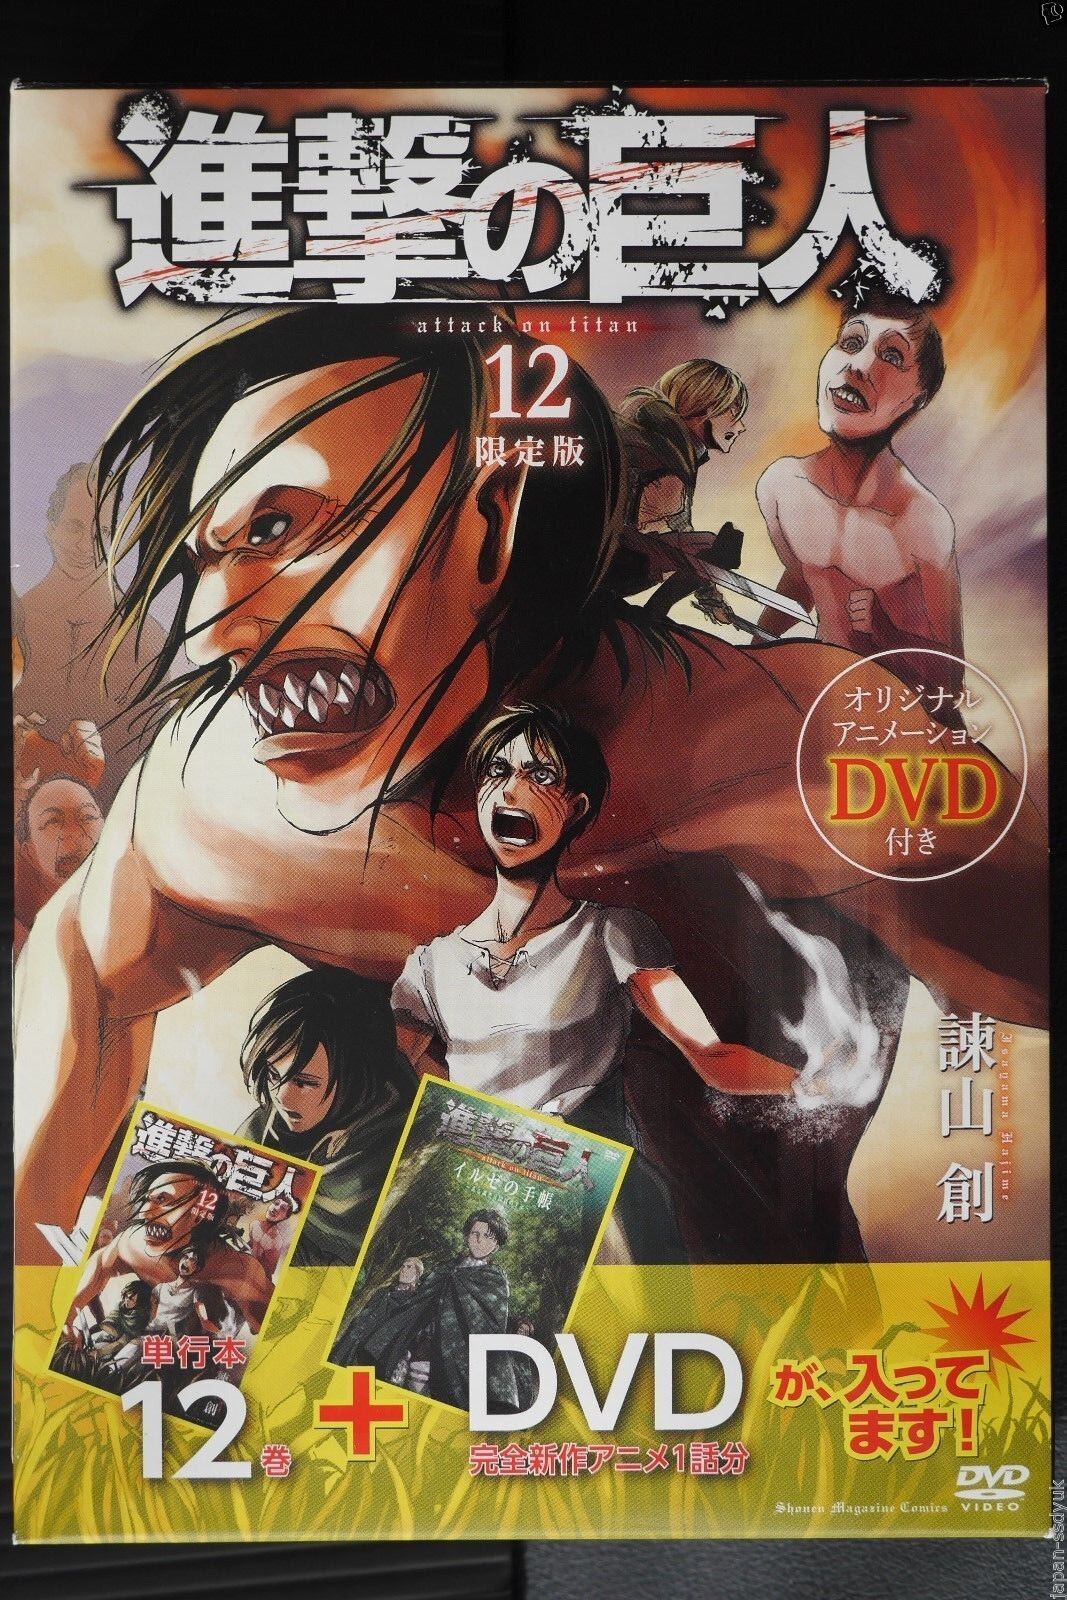 JAPAN Hajime Isayama manga: Attack on Titan / Shingeki no Kyojin 12 Limited Edit